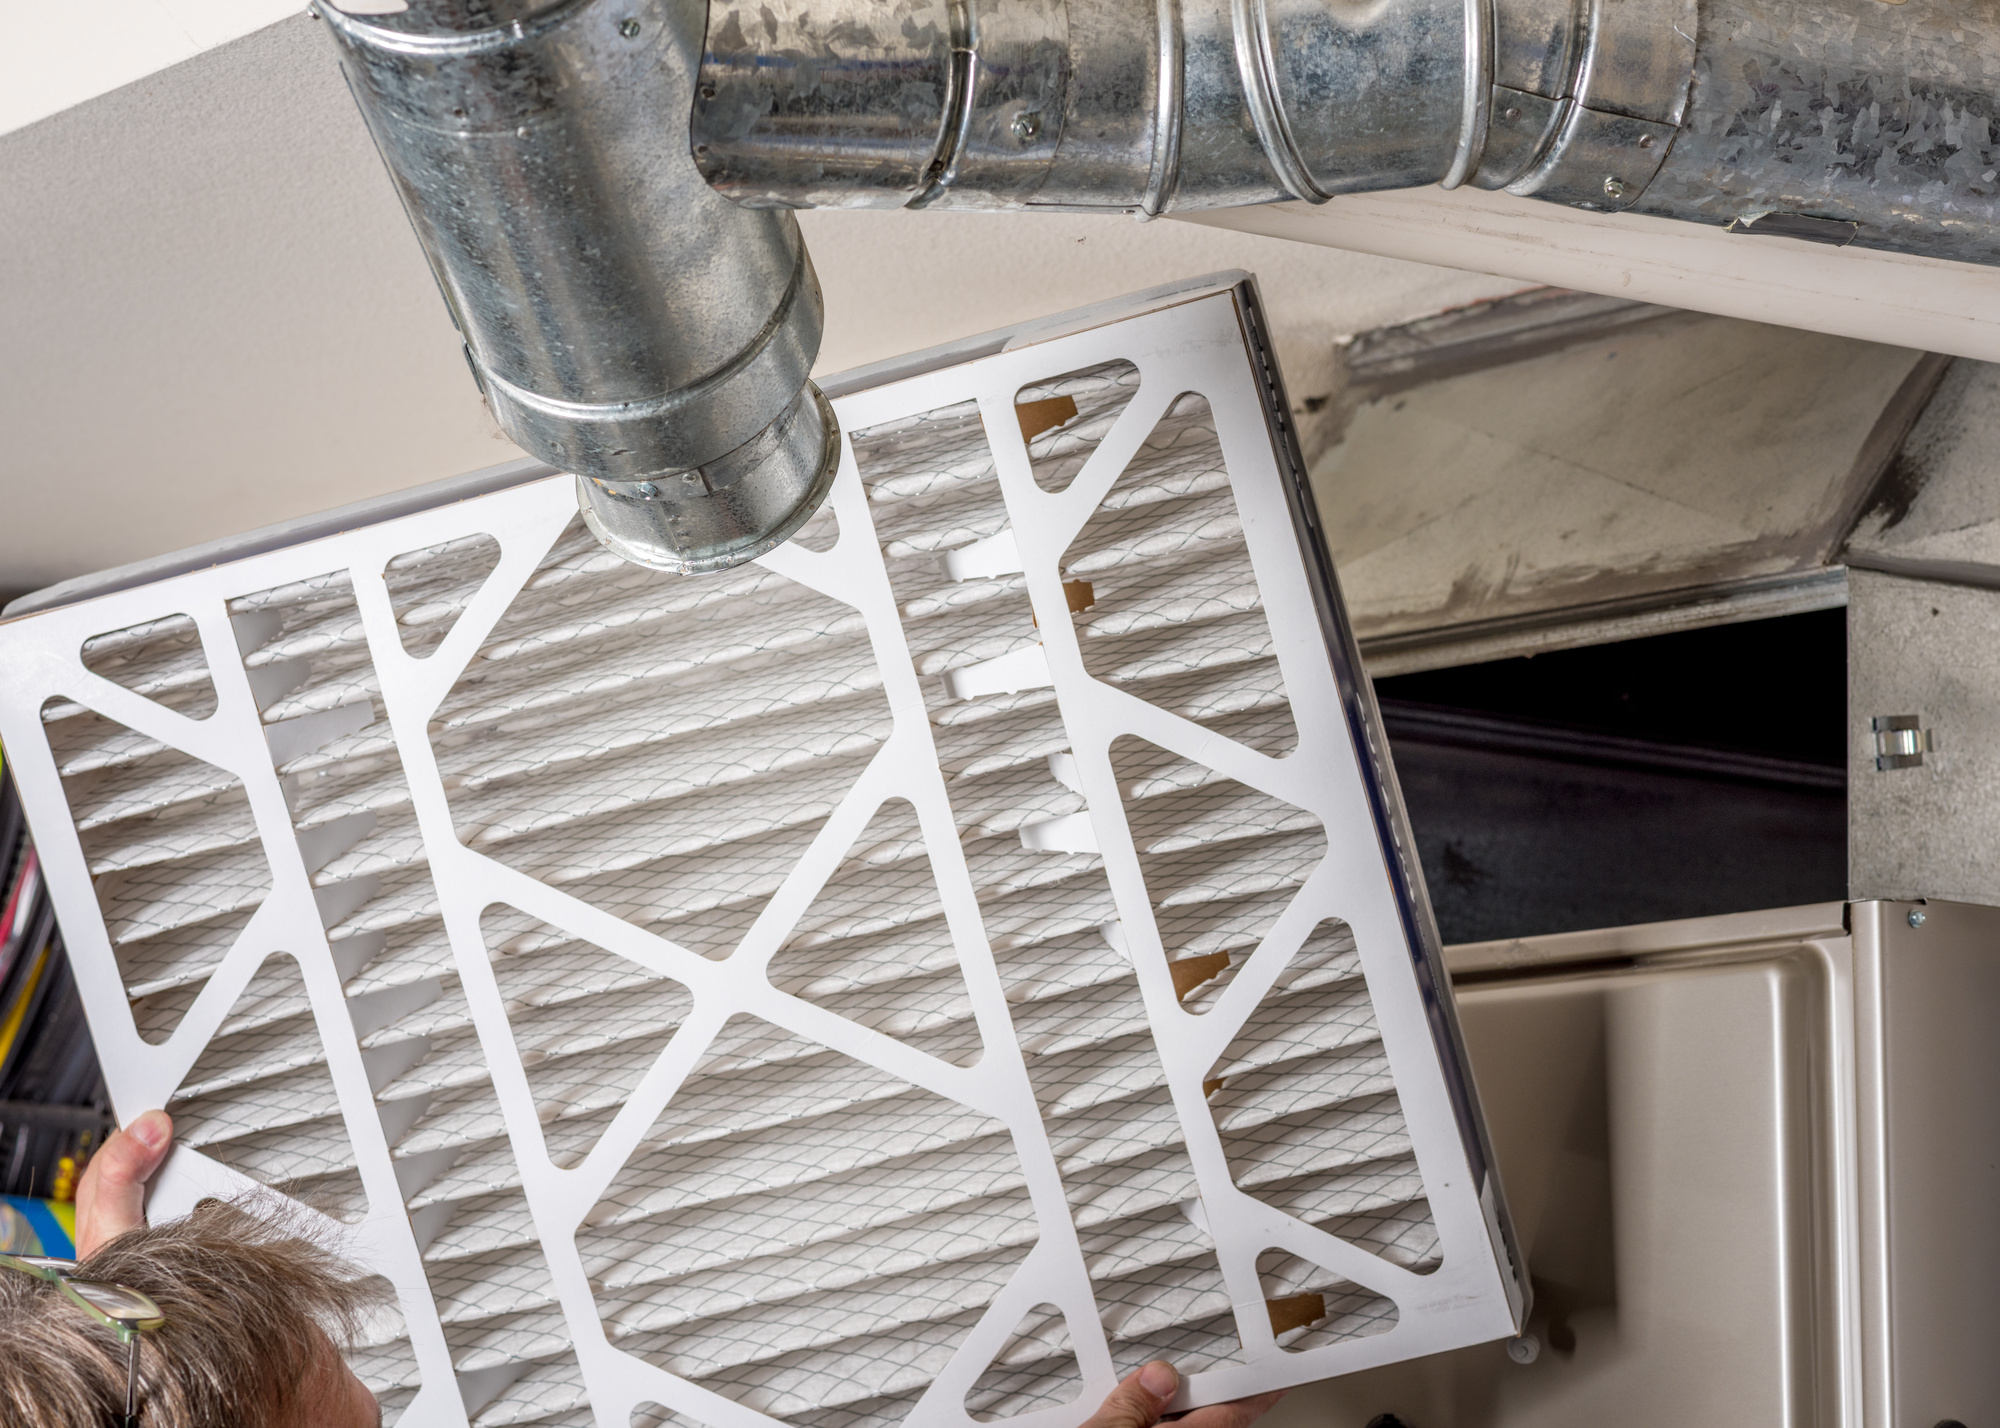 Home Furnace filter inspection for dirt